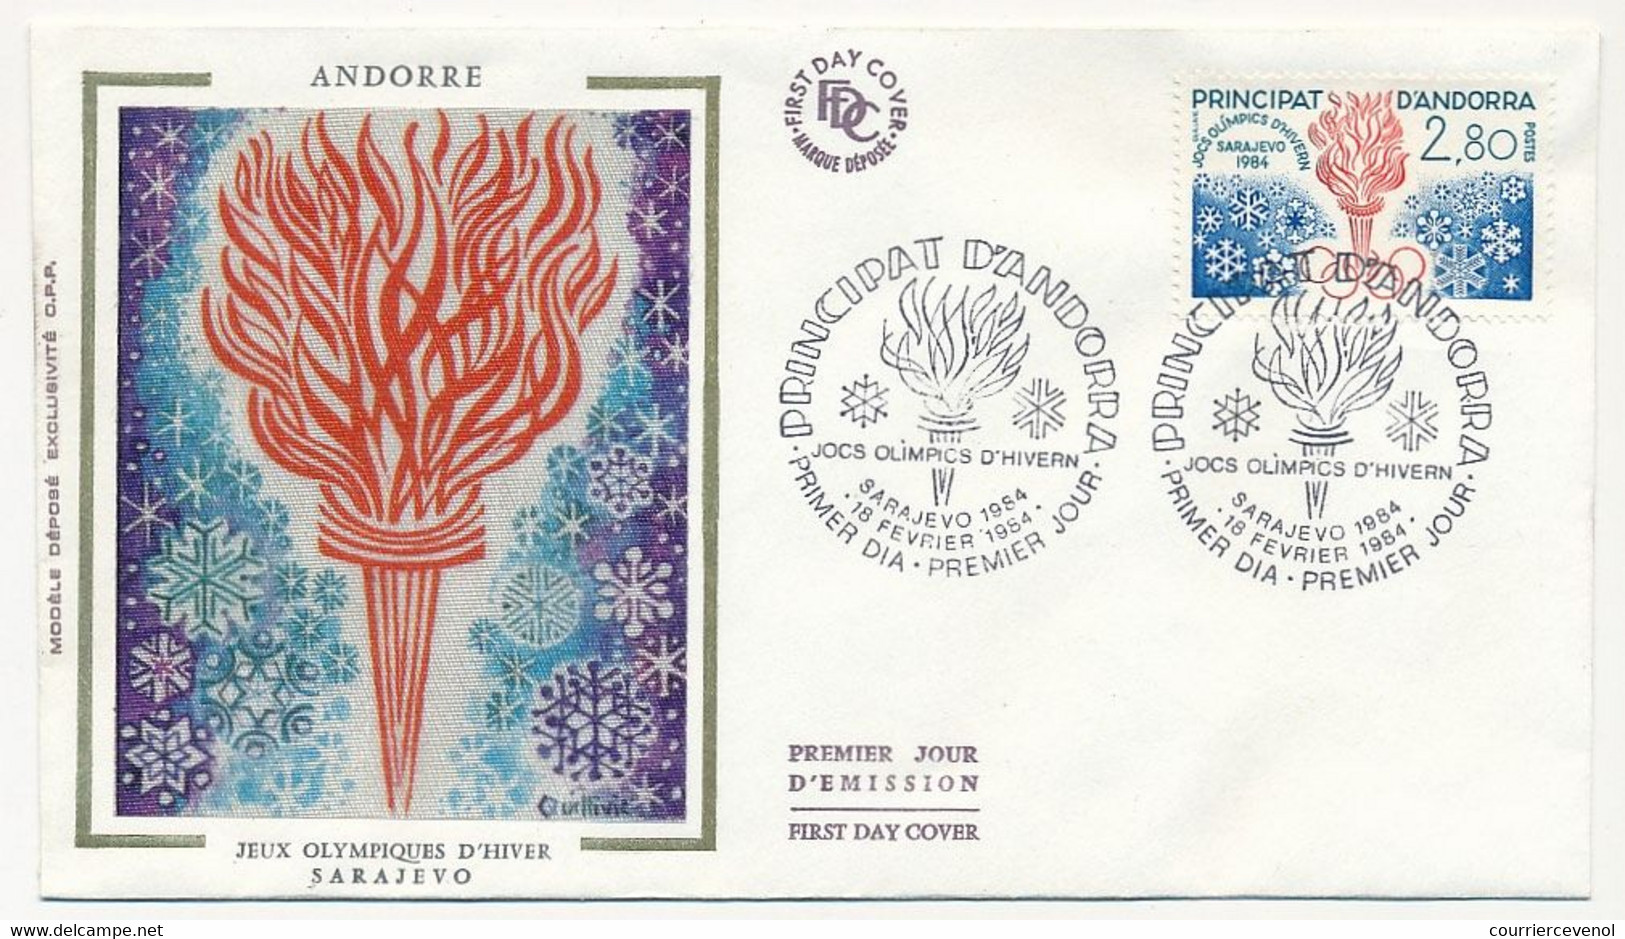 ANDORRE - Enveloppe FDC Soie =>  2,80 F Jeux Olympiques D'Hiver SARAJEVO - 18/2/1984 - Principat D'Andorra - FDC